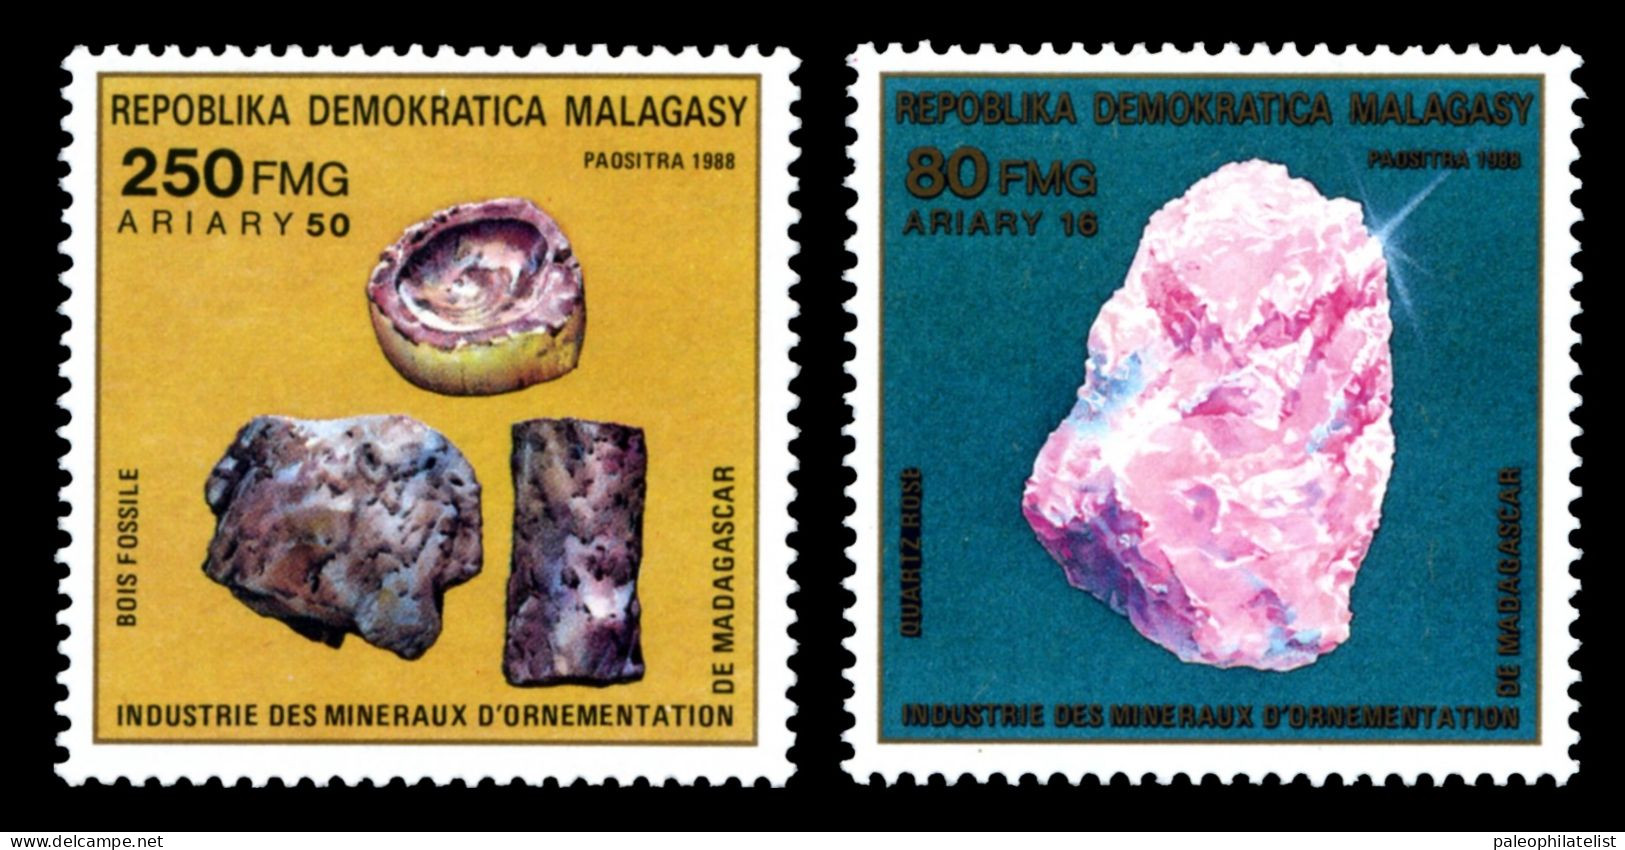 Madagaskar 1989  "Ornamental Mineral Industry", Petrified Wood, Minerals - Prehistorics